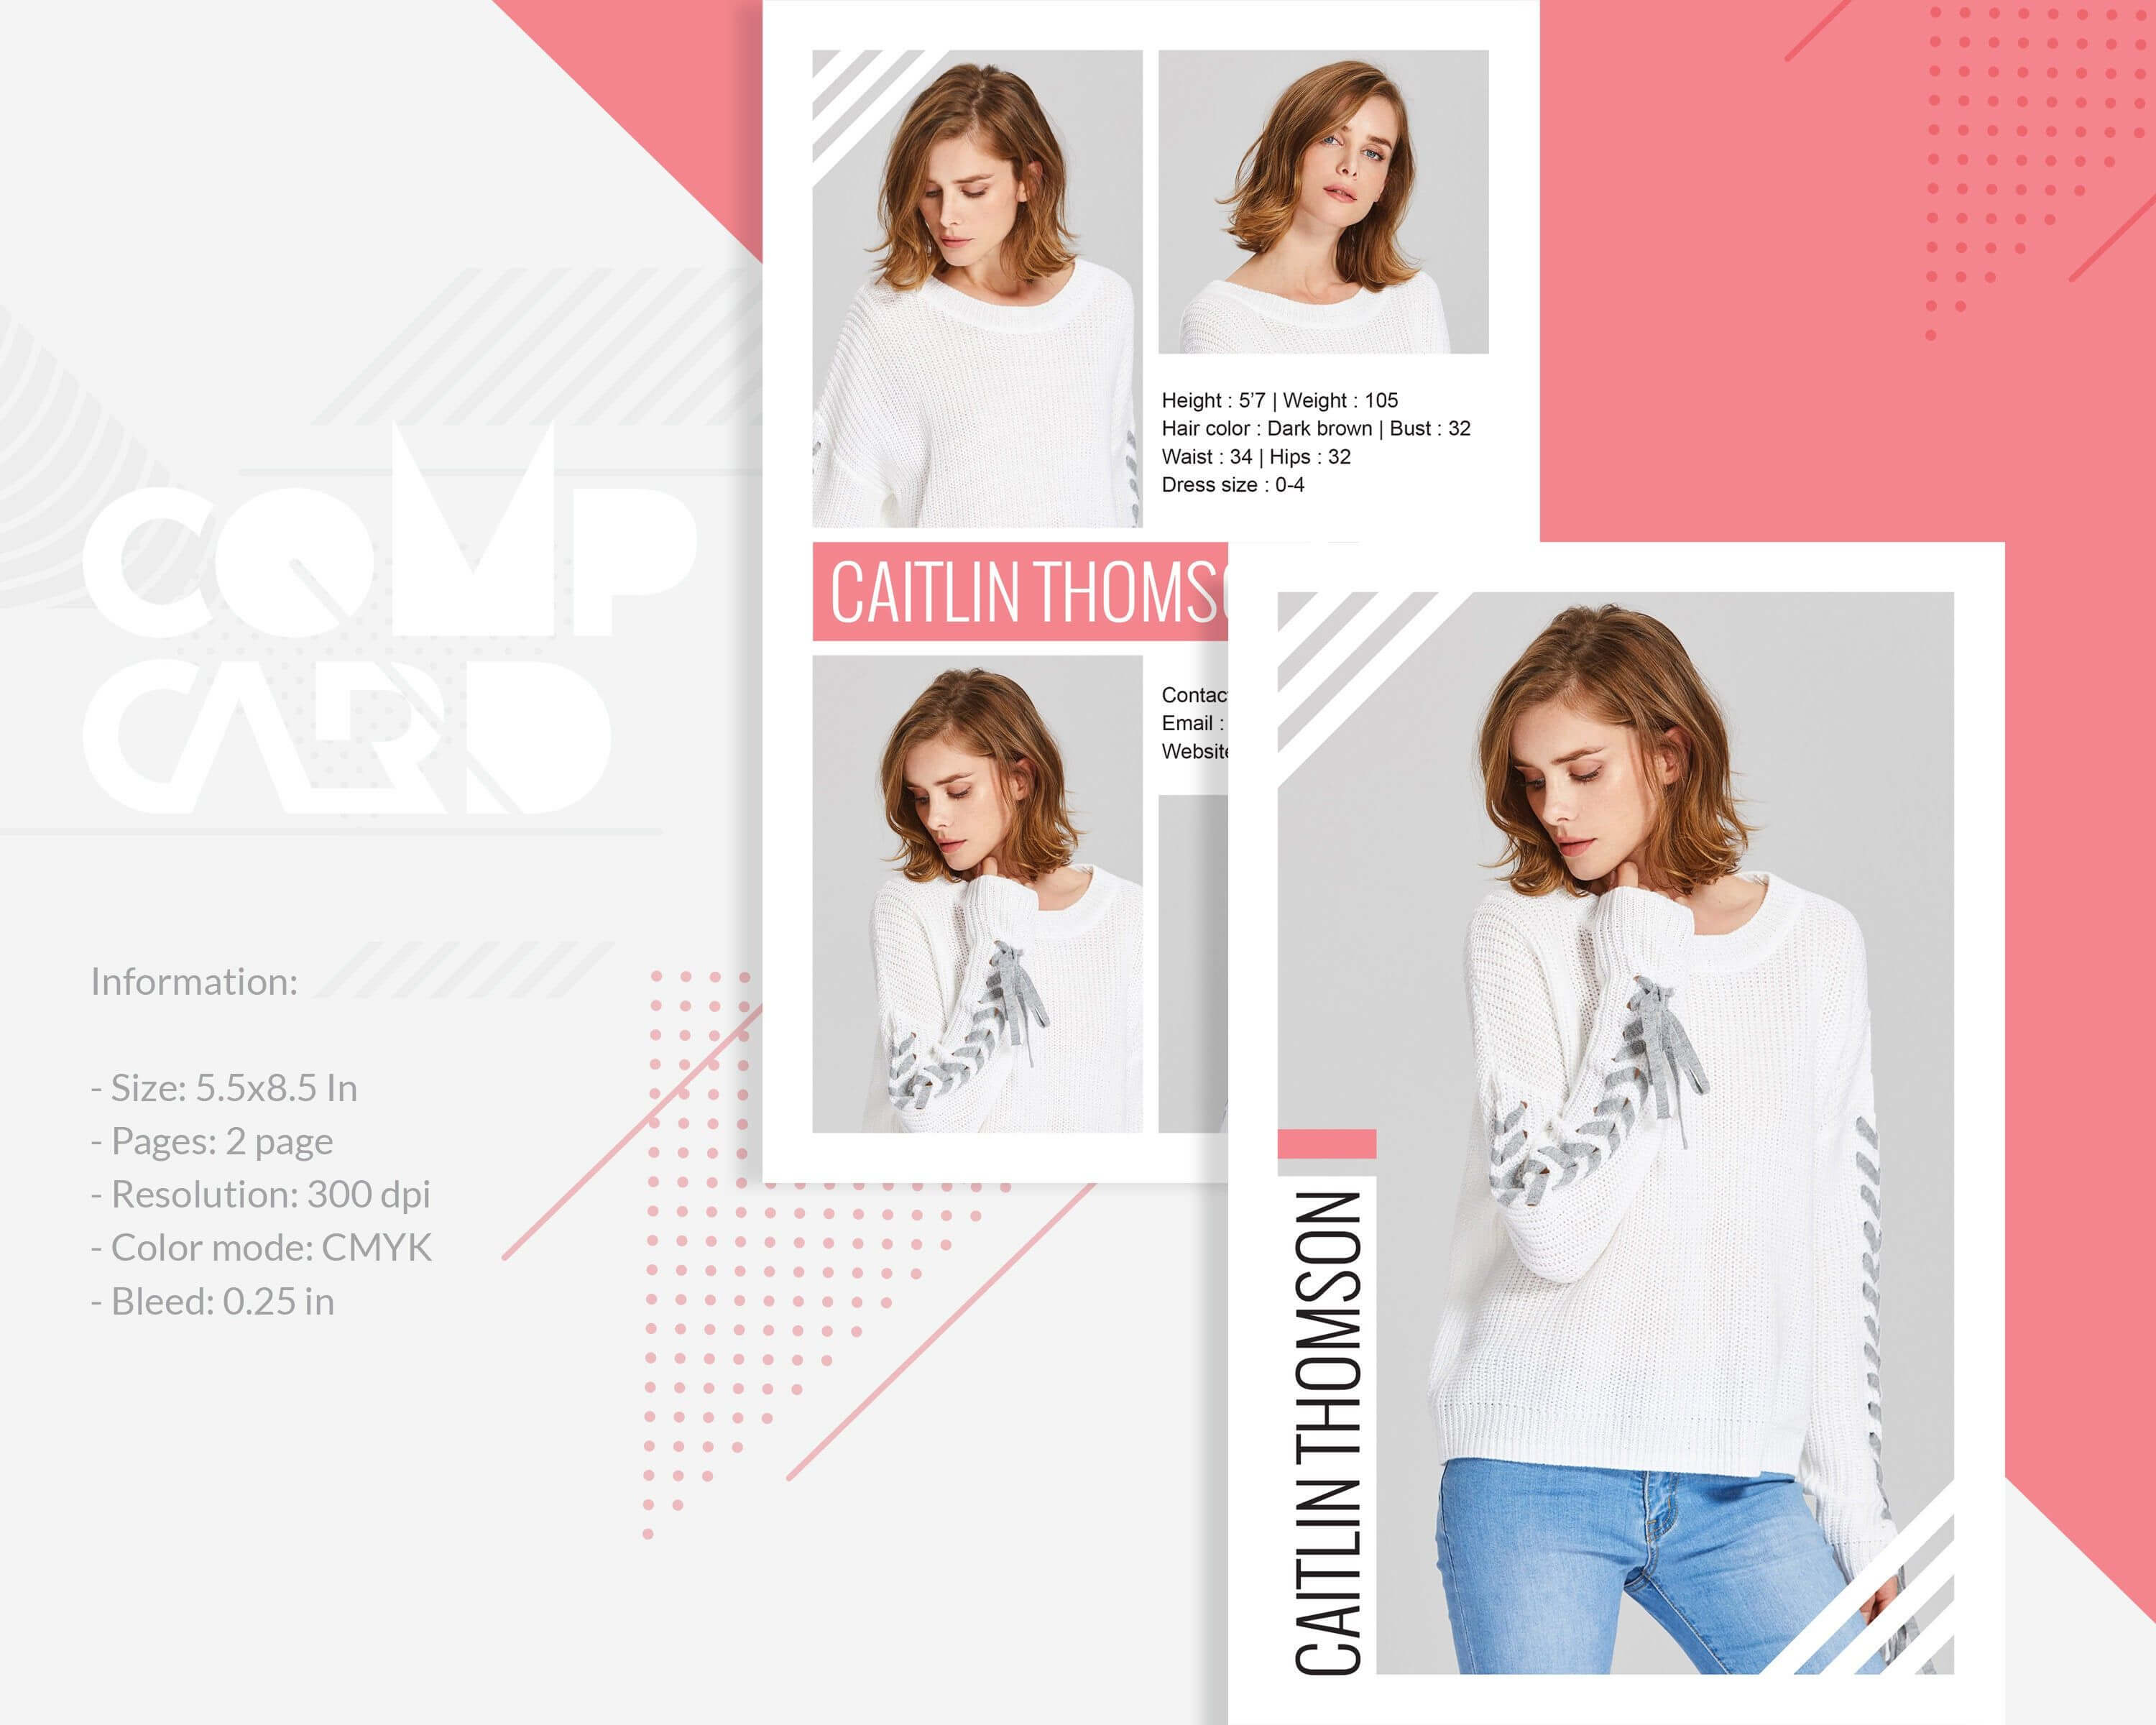 Modeling Comp Card | Fashion Model Comp Card Template Regarding Comp Card Template Psd